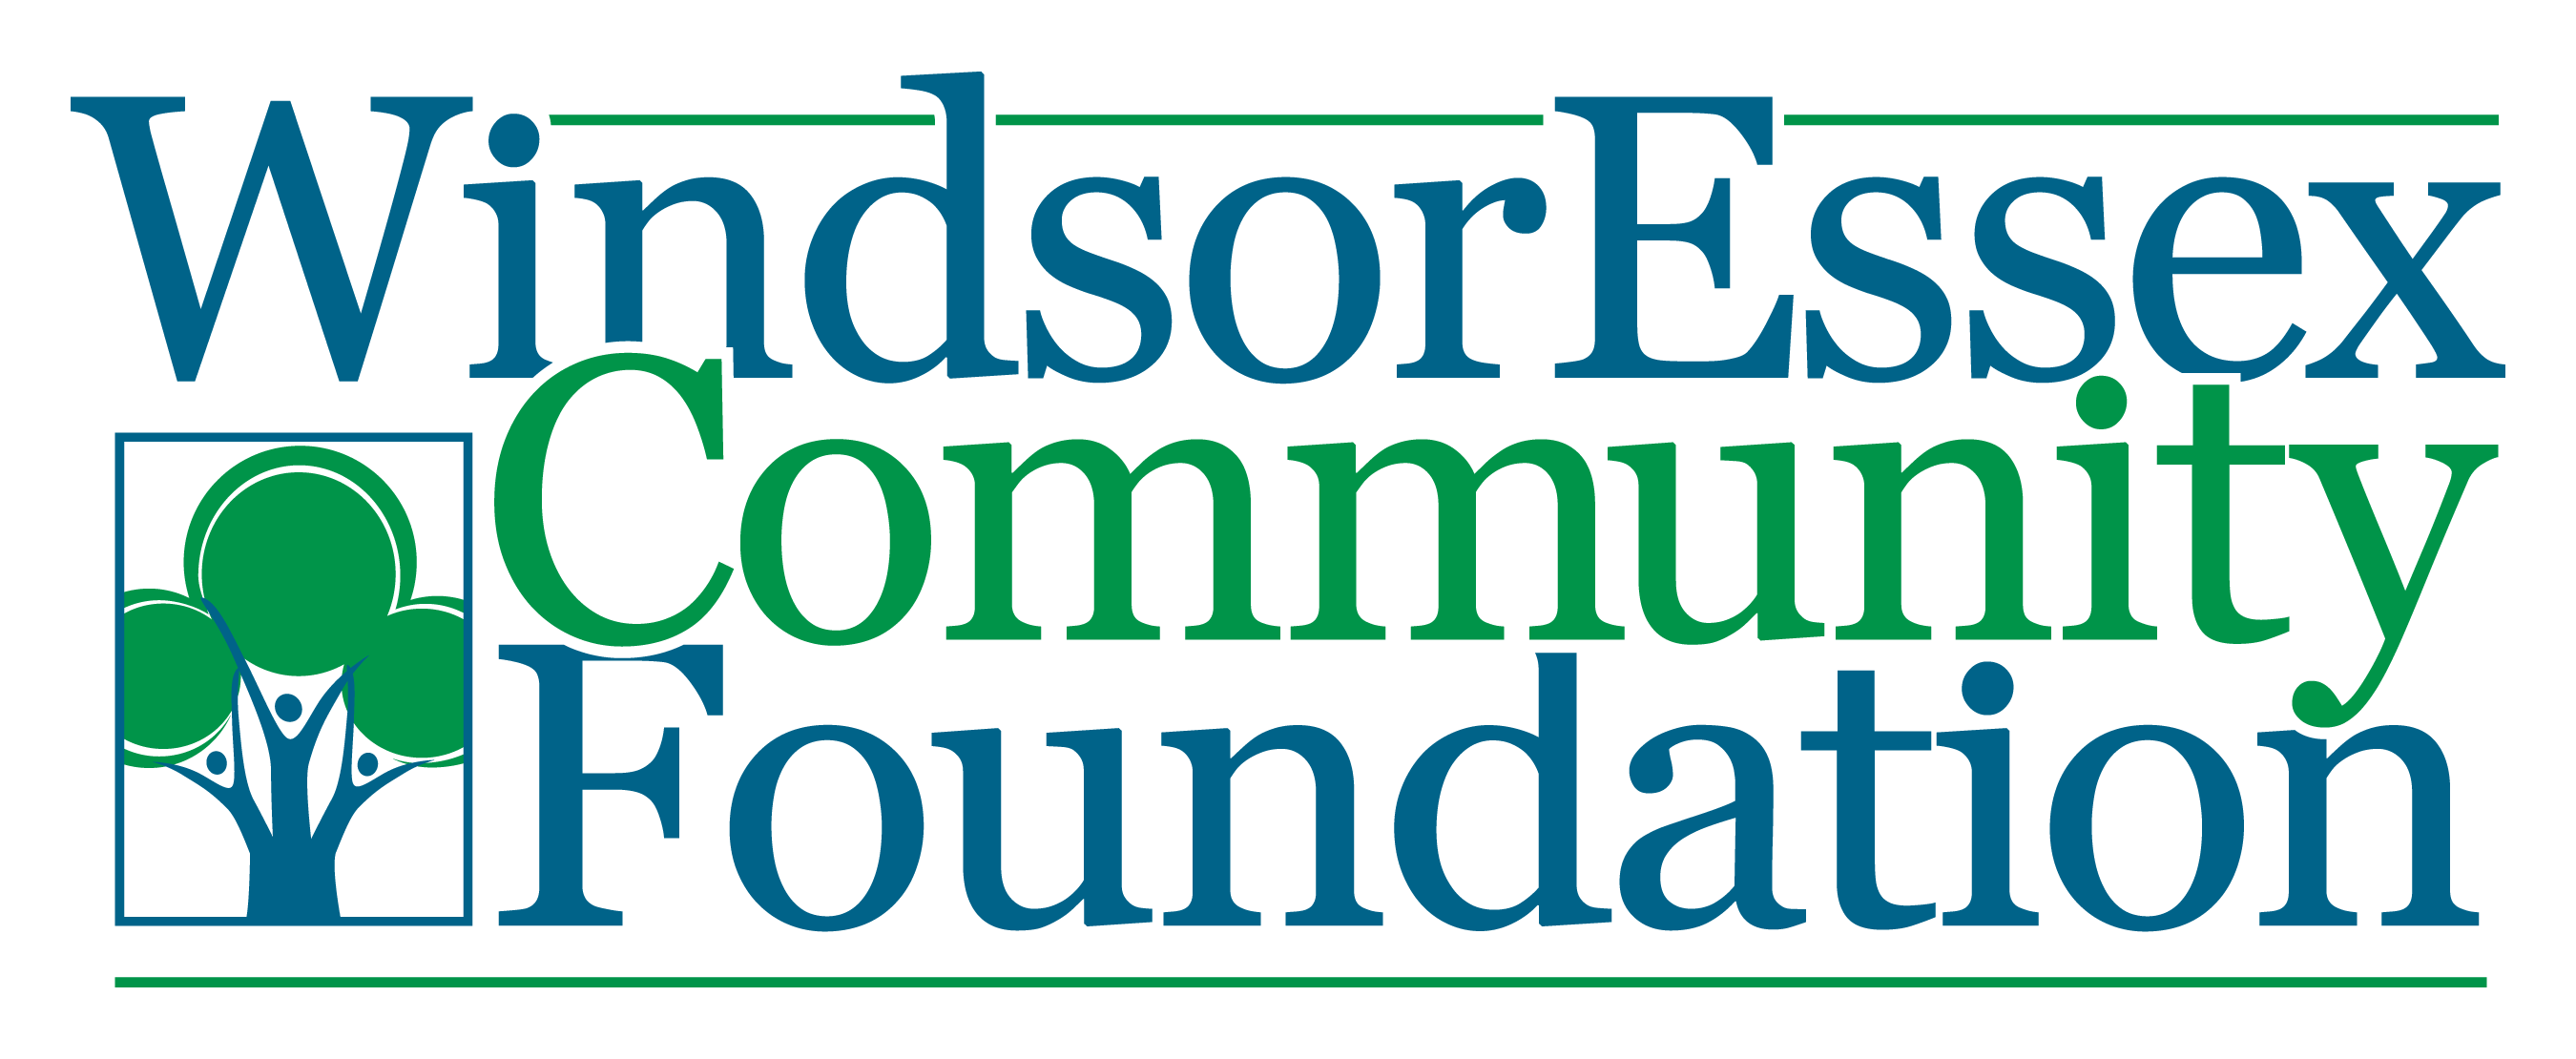 WindsorEssex Community Foundation logo